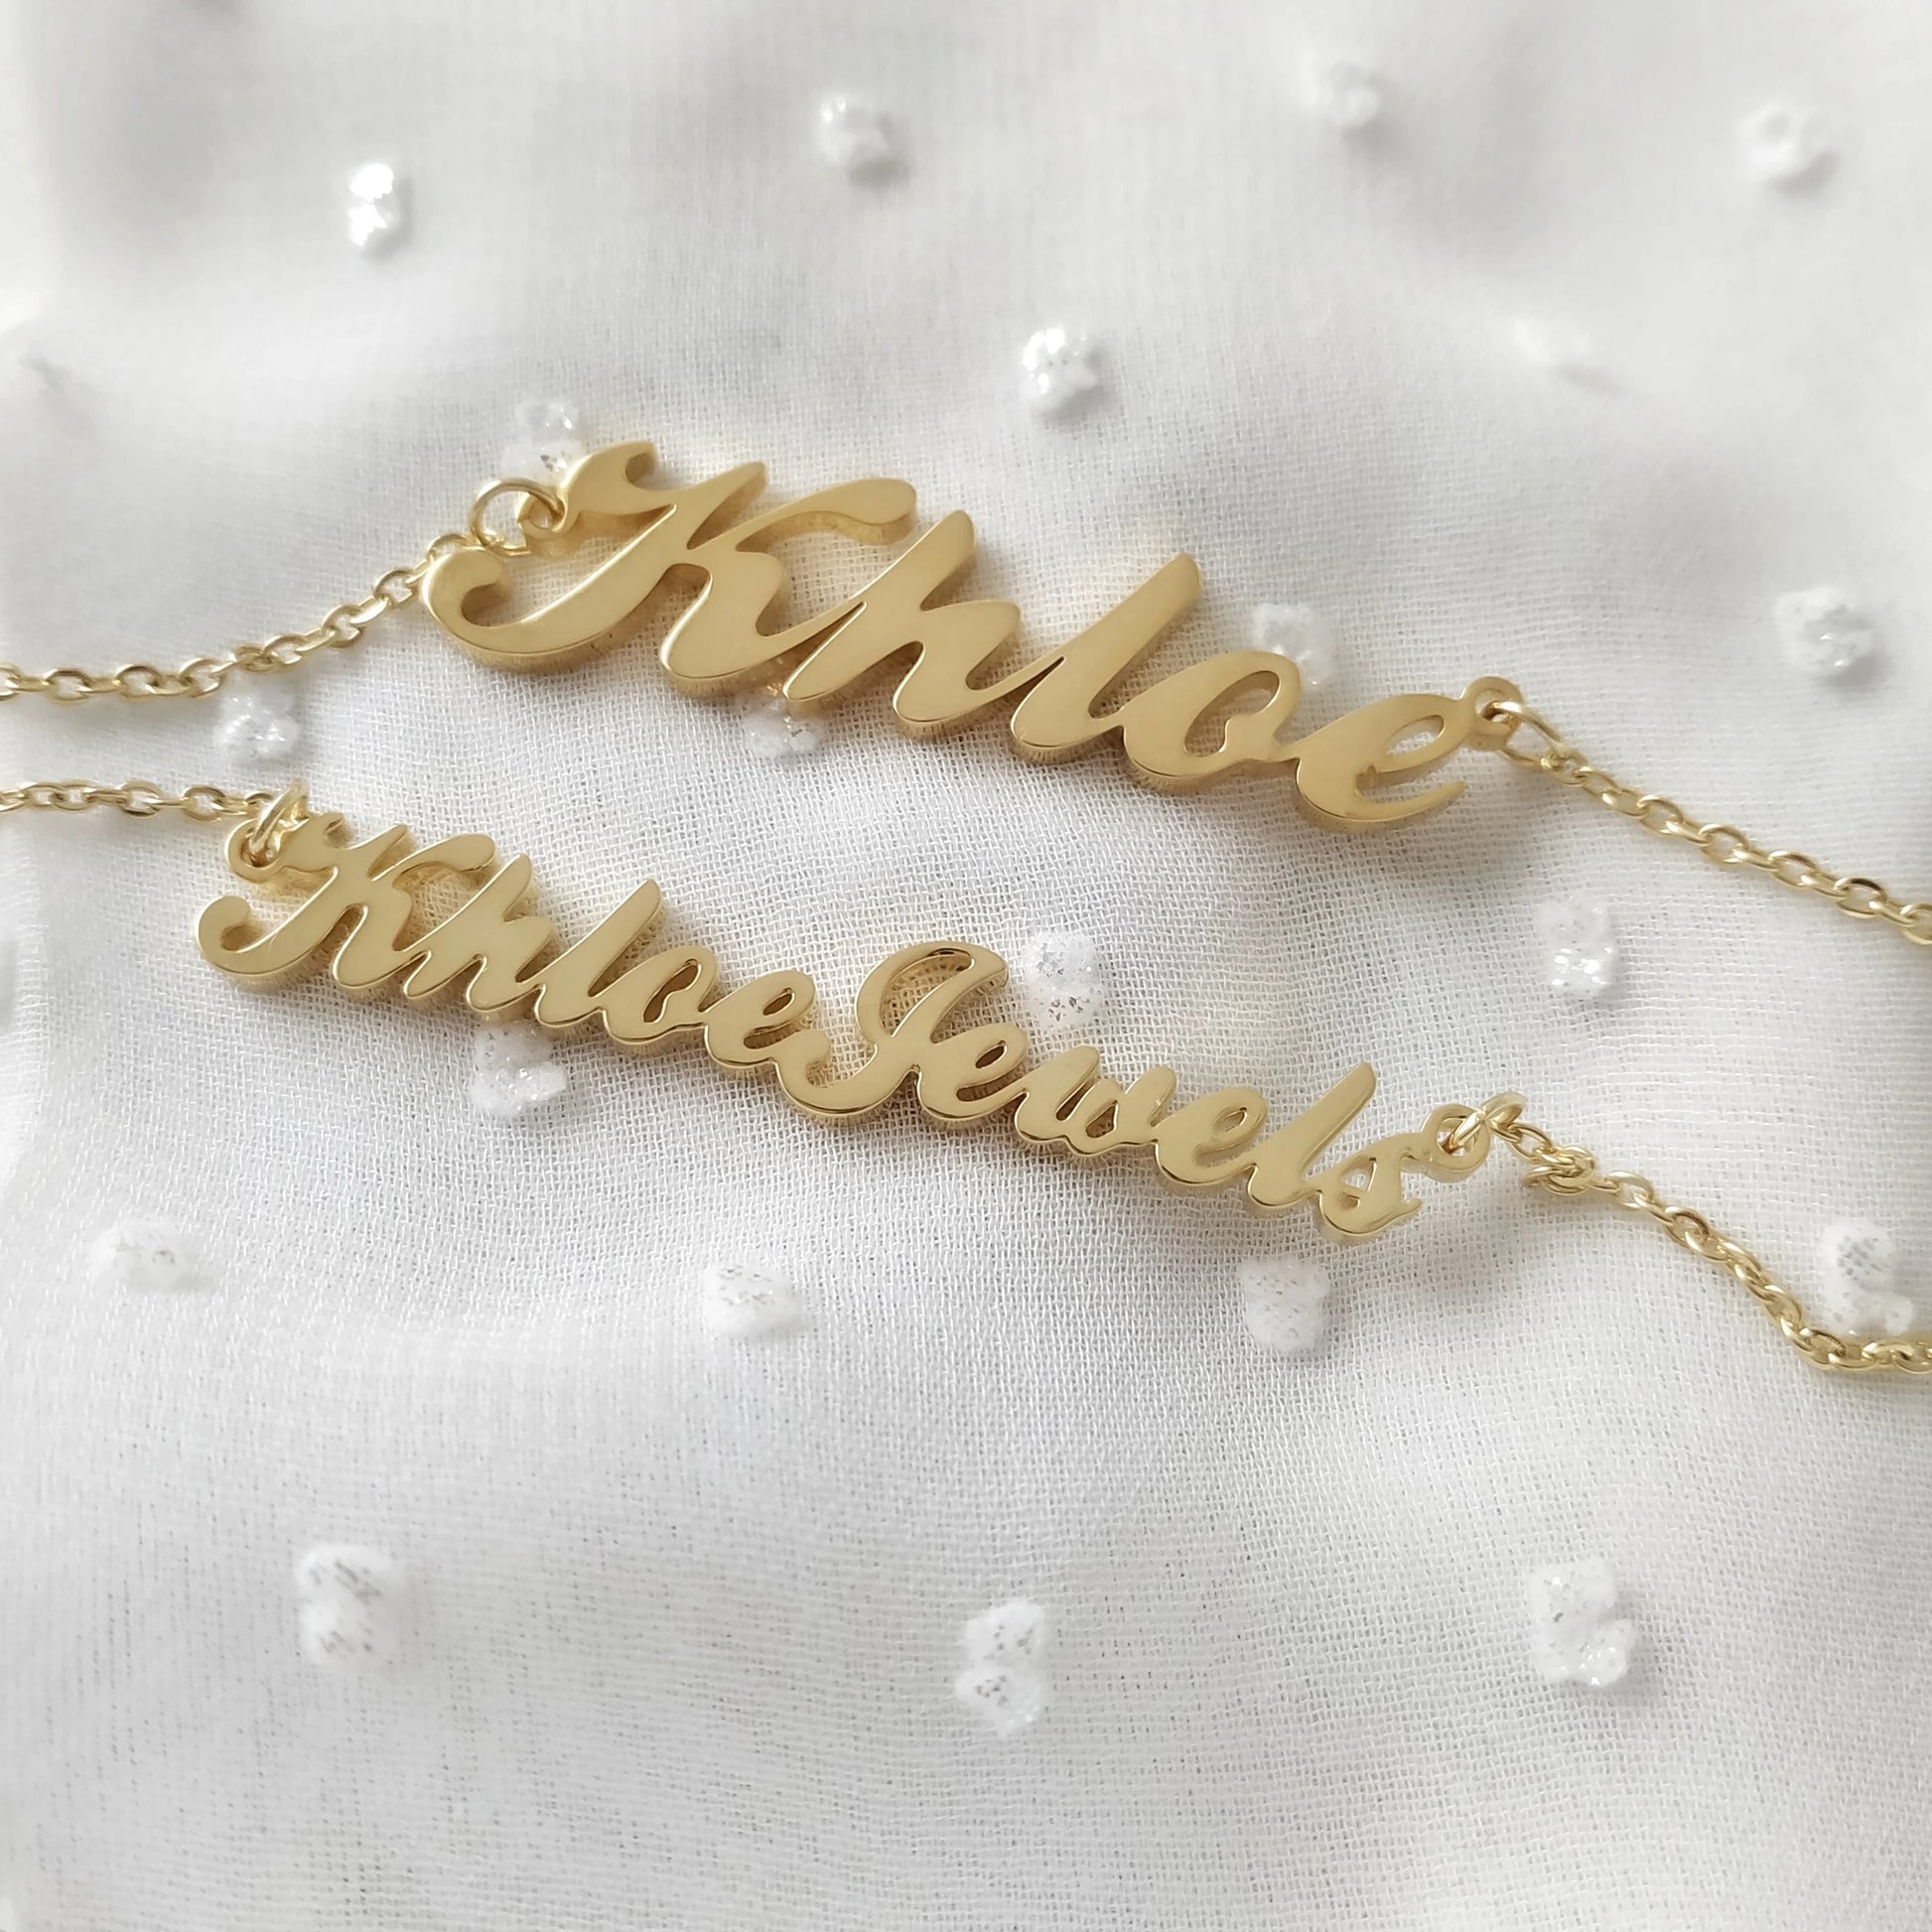 Necklaces Pretty Customized Name Necklace KHLOE JEWELS Custom Jewelry